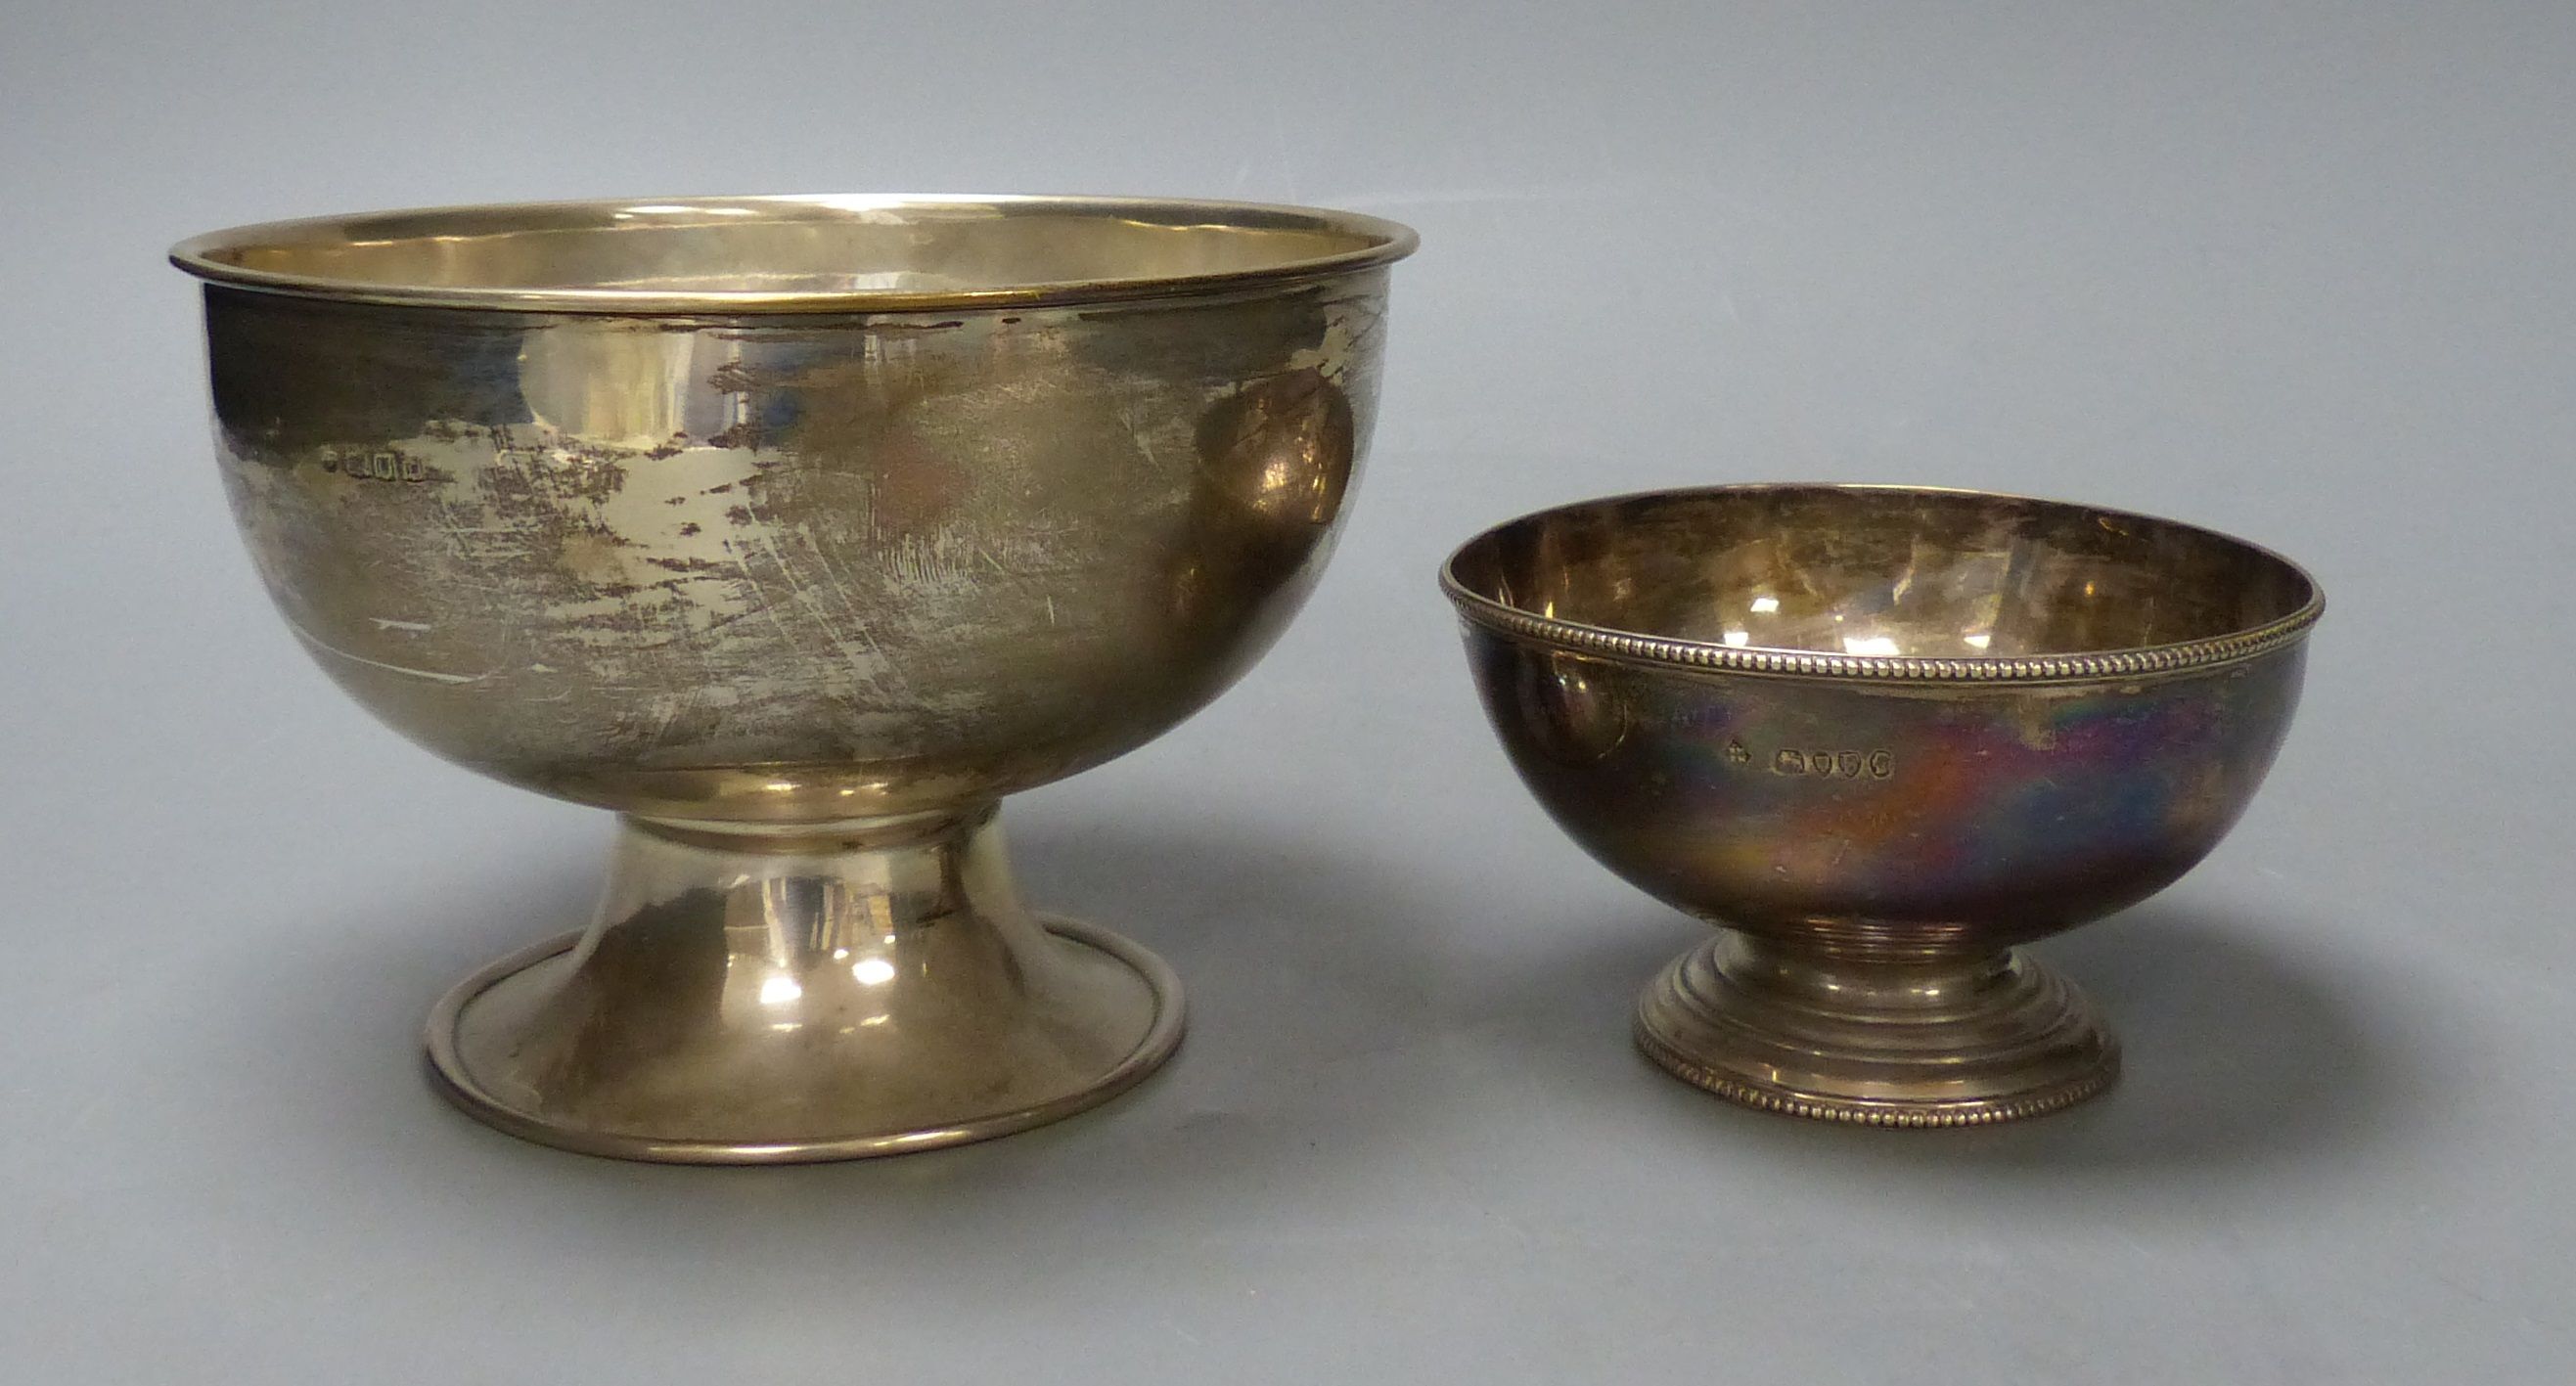 A George V silver rose bowl, London, 1919, 15.5cm and a Victorian silver sugar bowl, London, 1881, 10.4cm